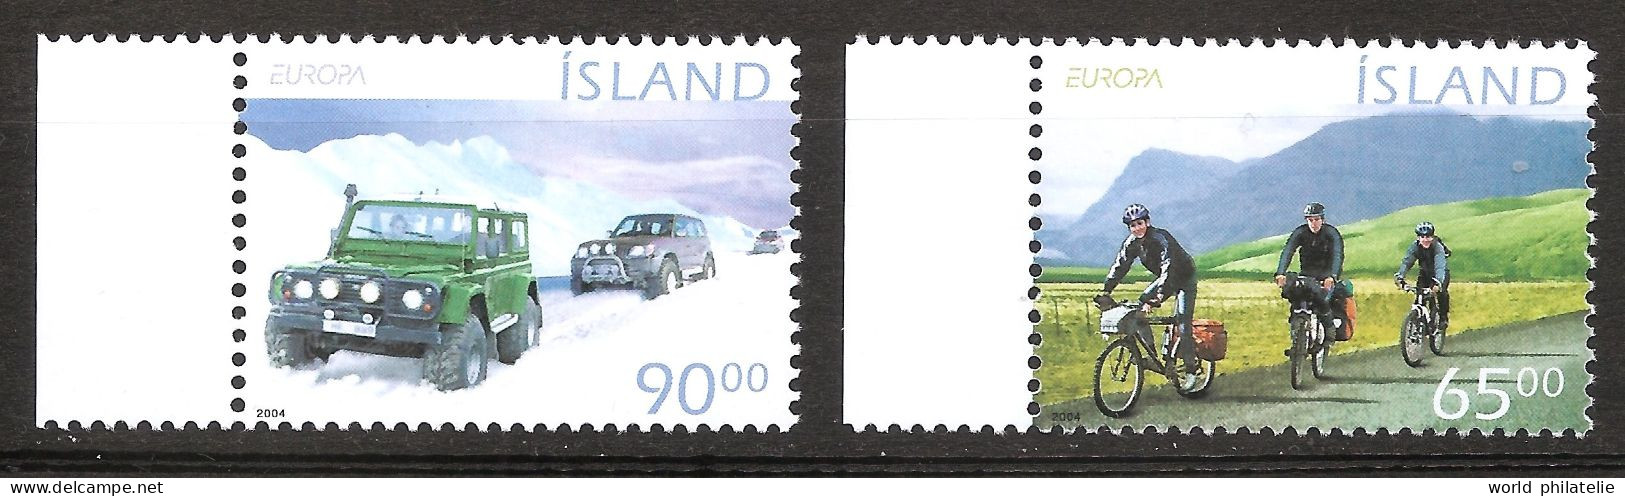 Islande Island 2004 N° 994 / 5 ** Europa, Vacances, Vélo, Jeep, Glaciers, Cyclisme, Route, Tourisme, 4x4, Neige Montagne - Nuovi